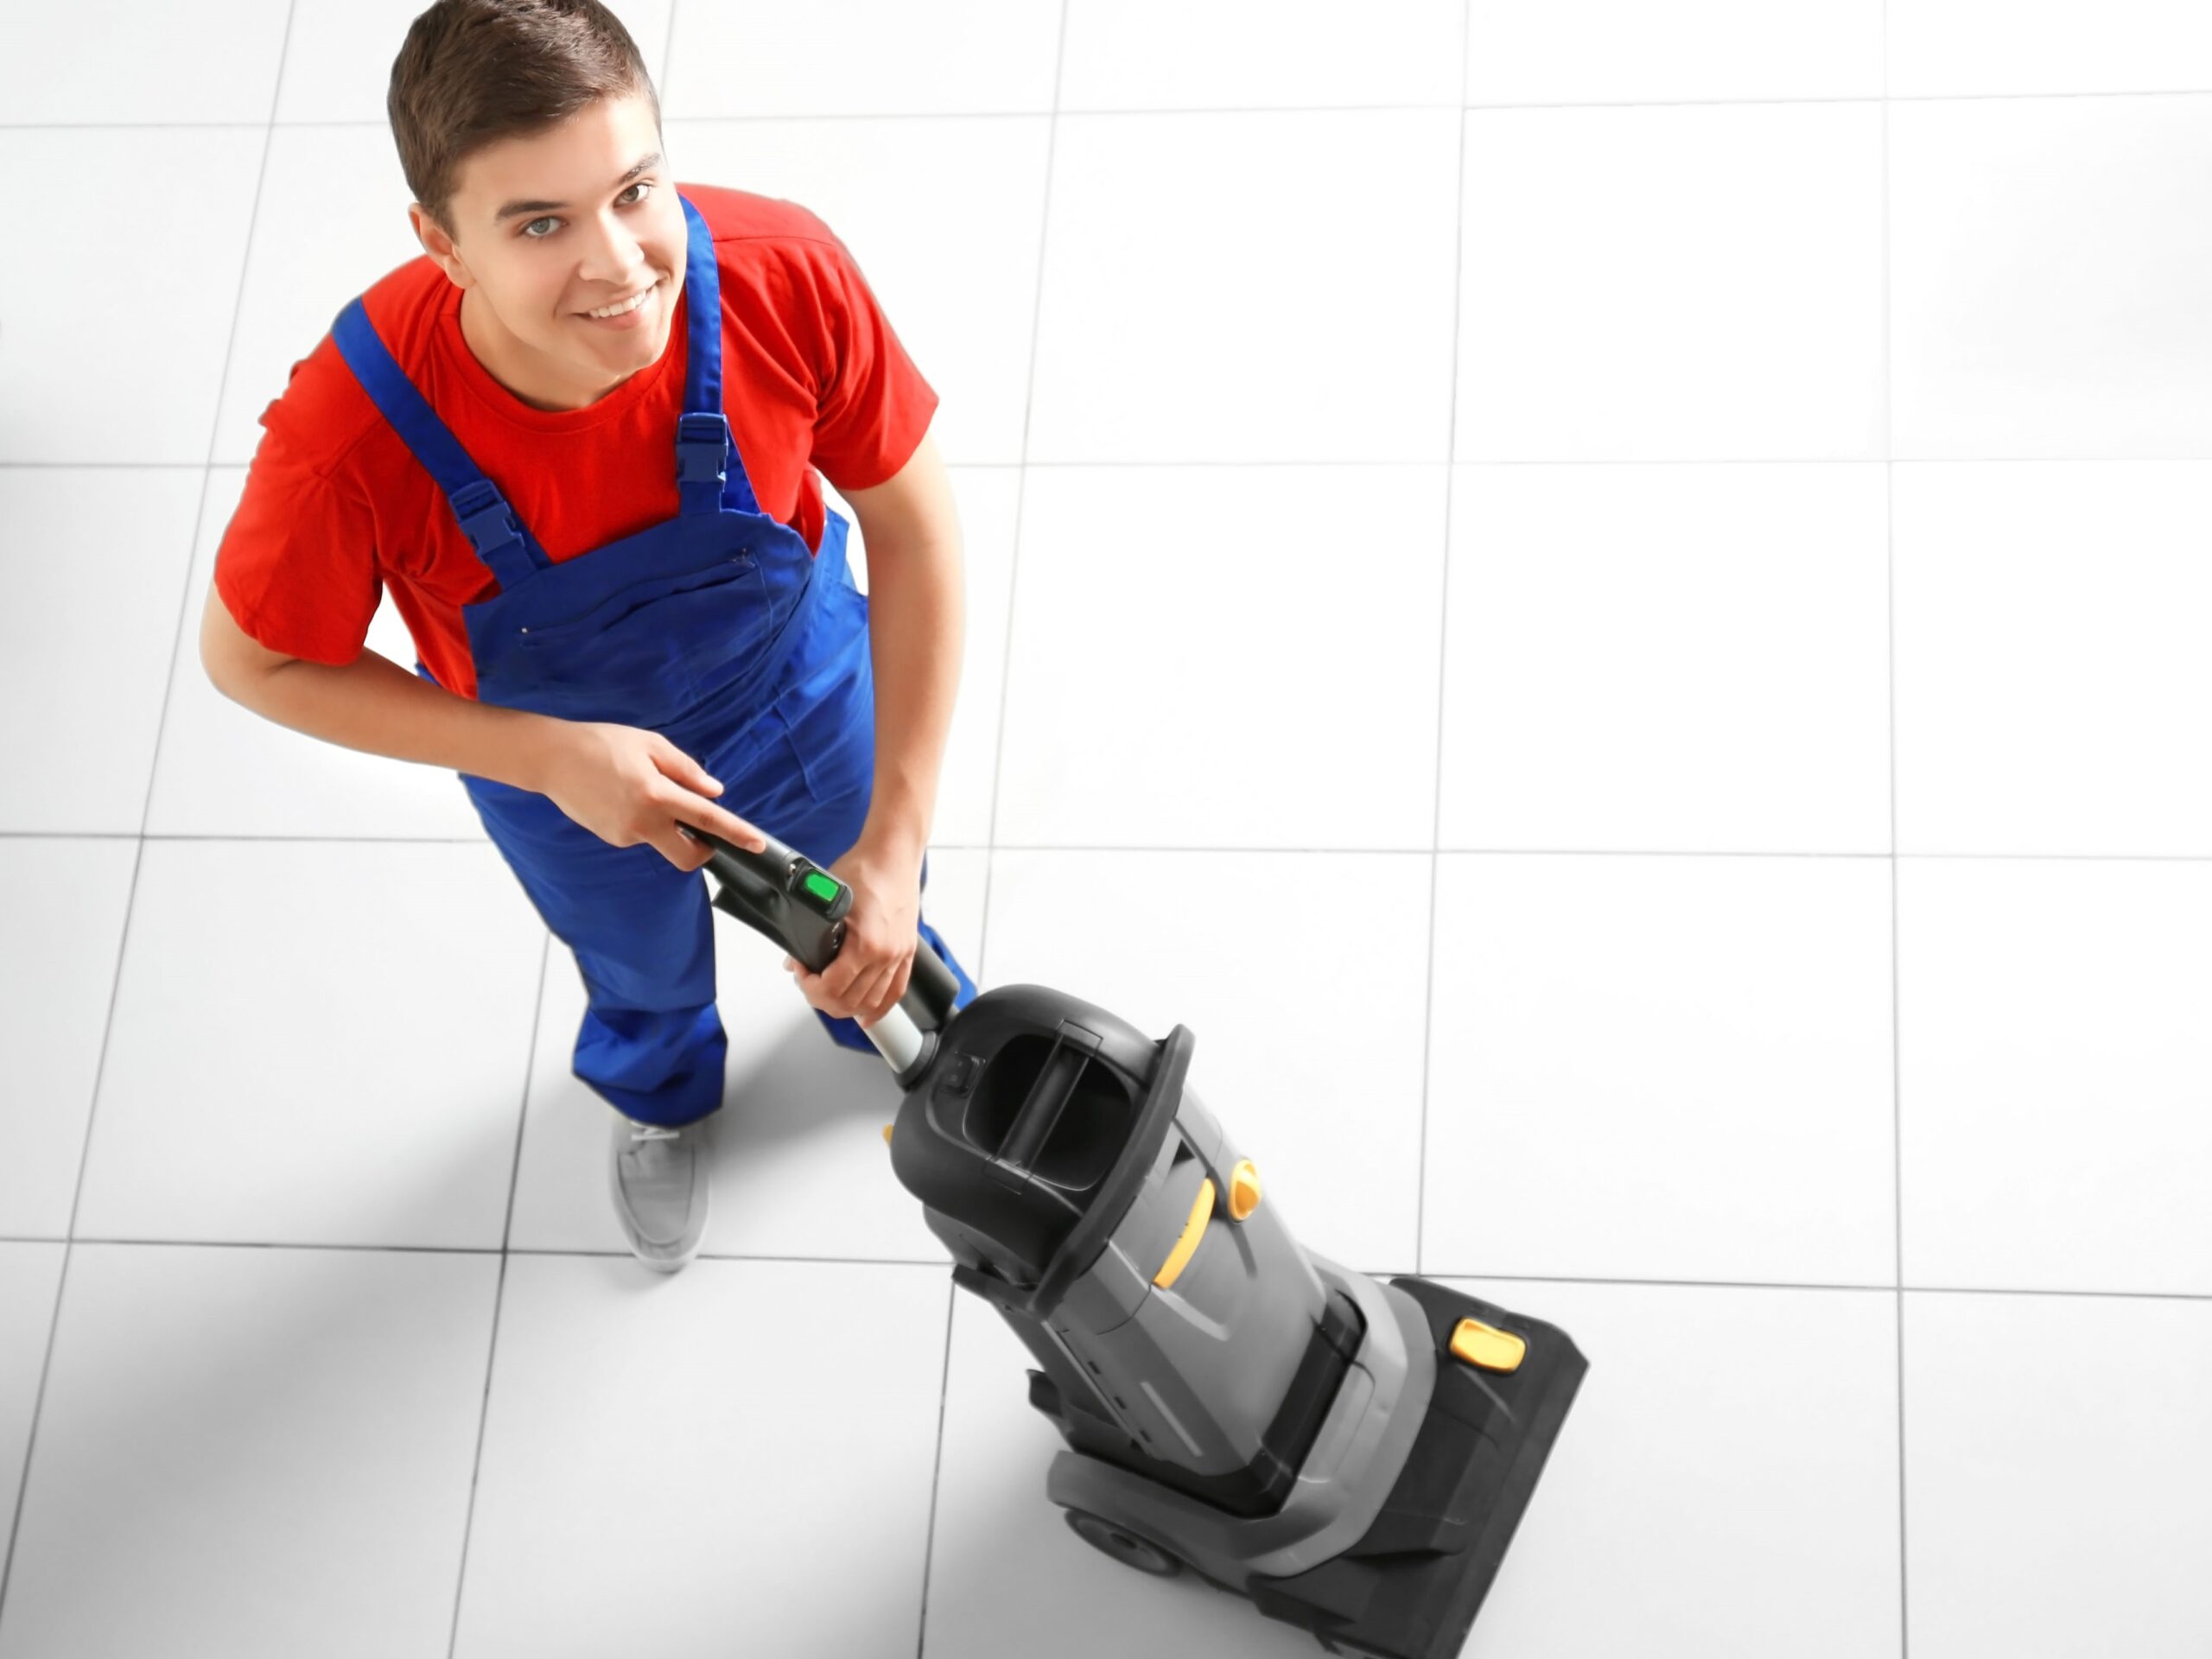 Man vacuuming floor, top view